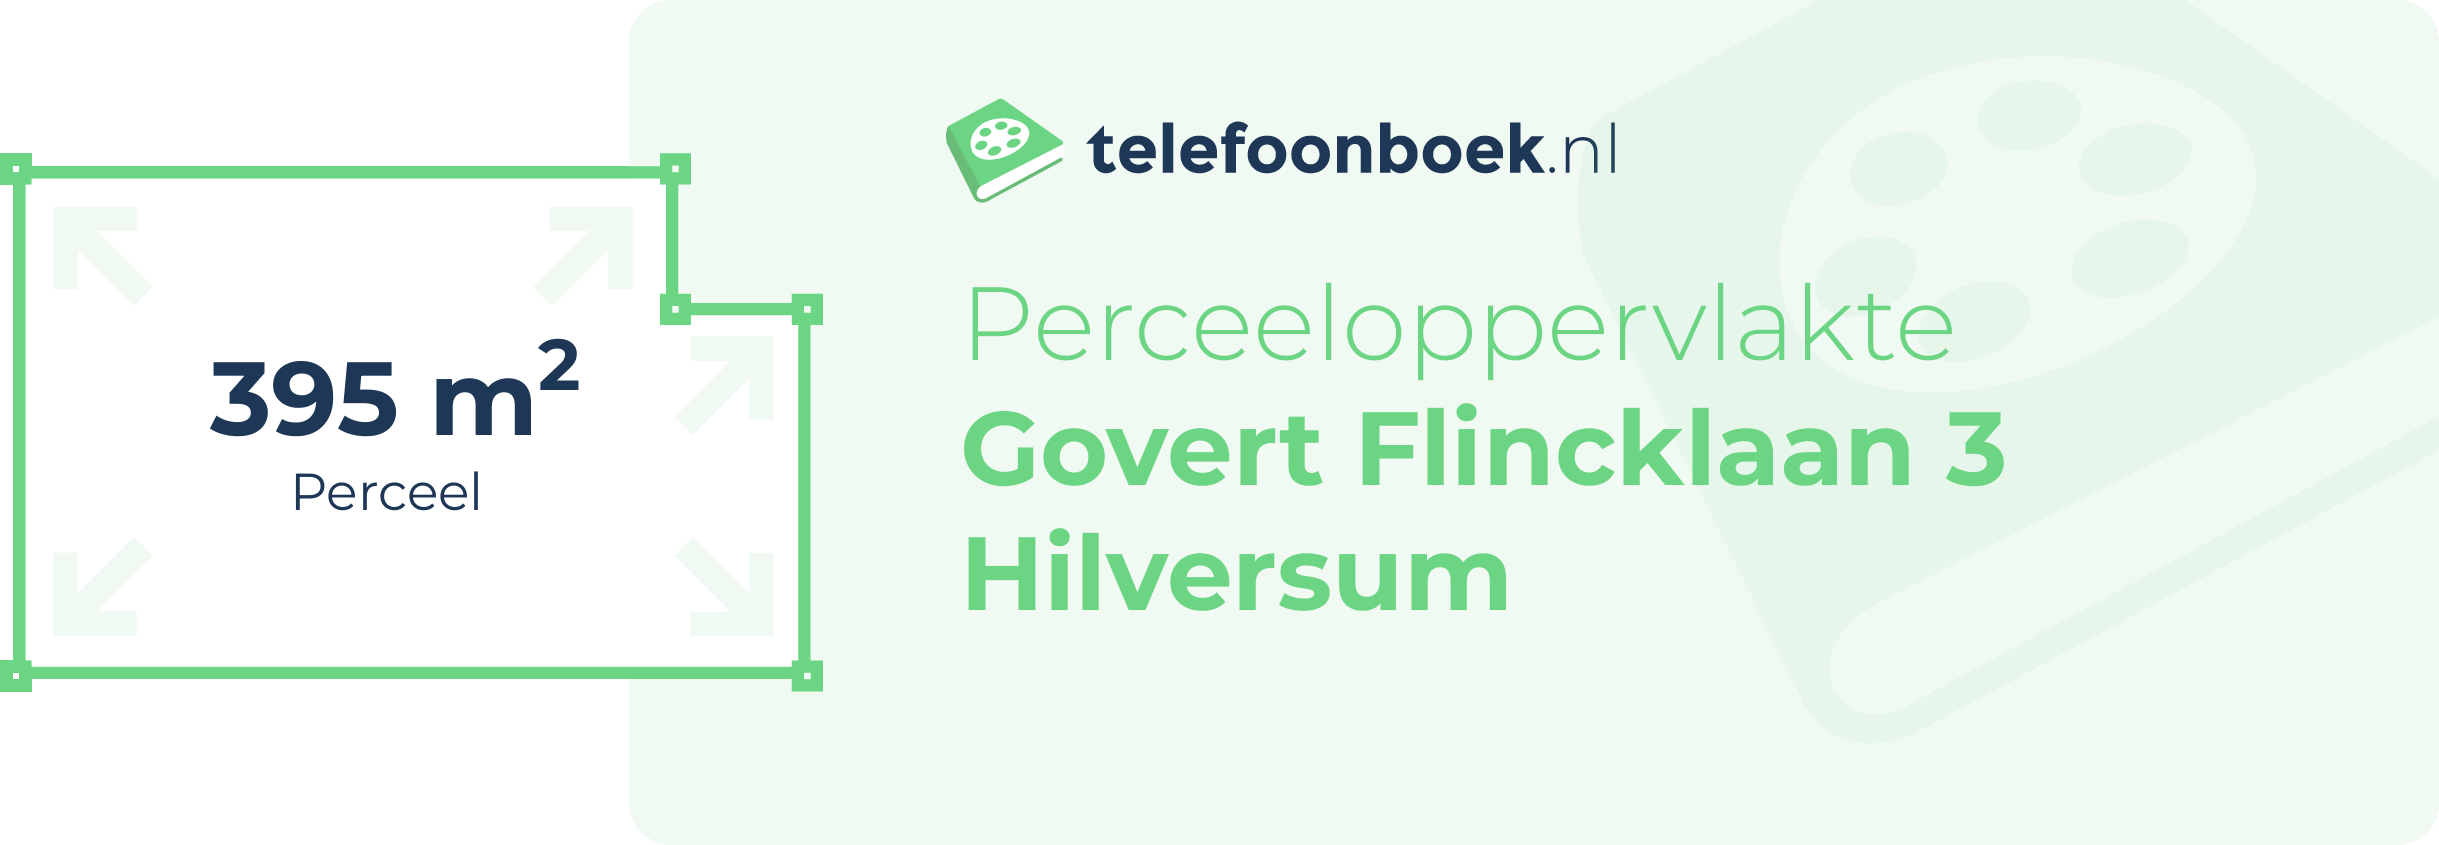 Perceeloppervlakte Govert Flincklaan 3 Hilversum